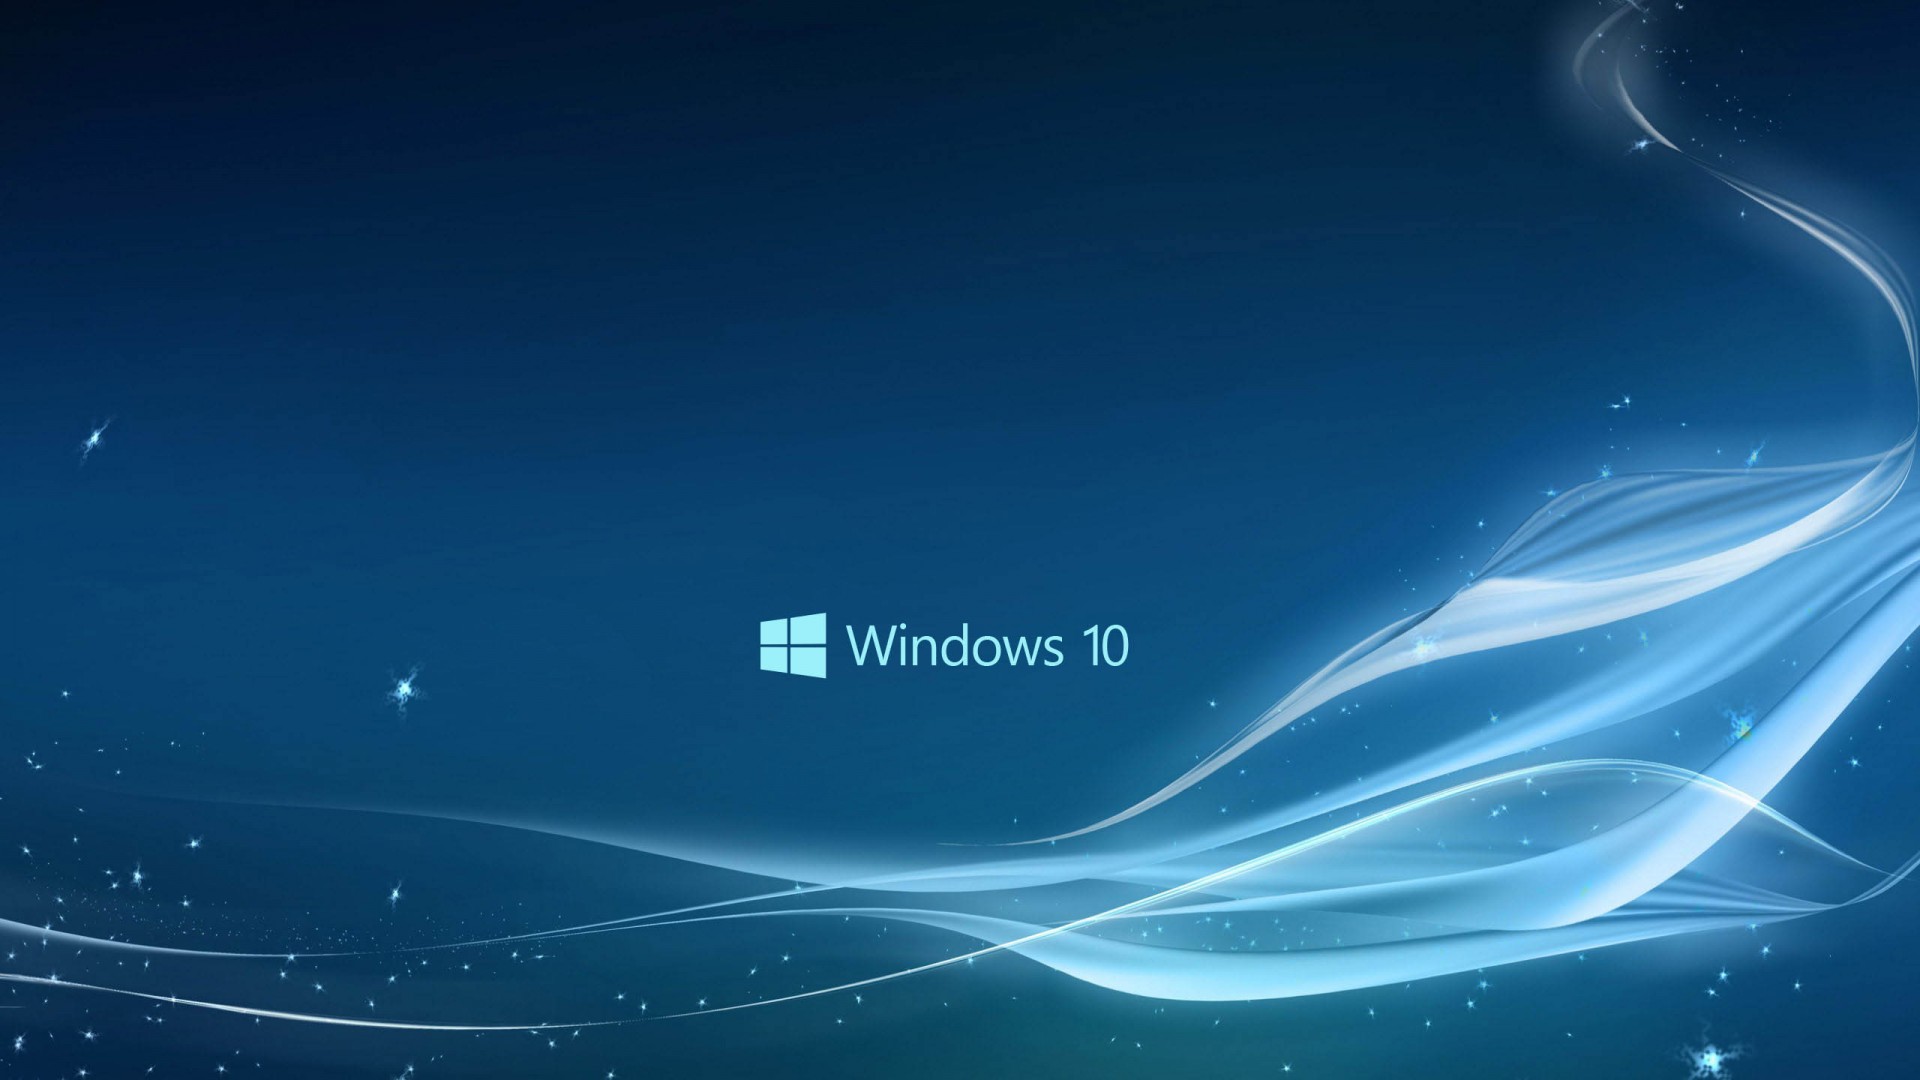 Windows 10 HD wallpaper 2015 1920x1080 1080p   Wallpaper   Wallpaper 1920x1080